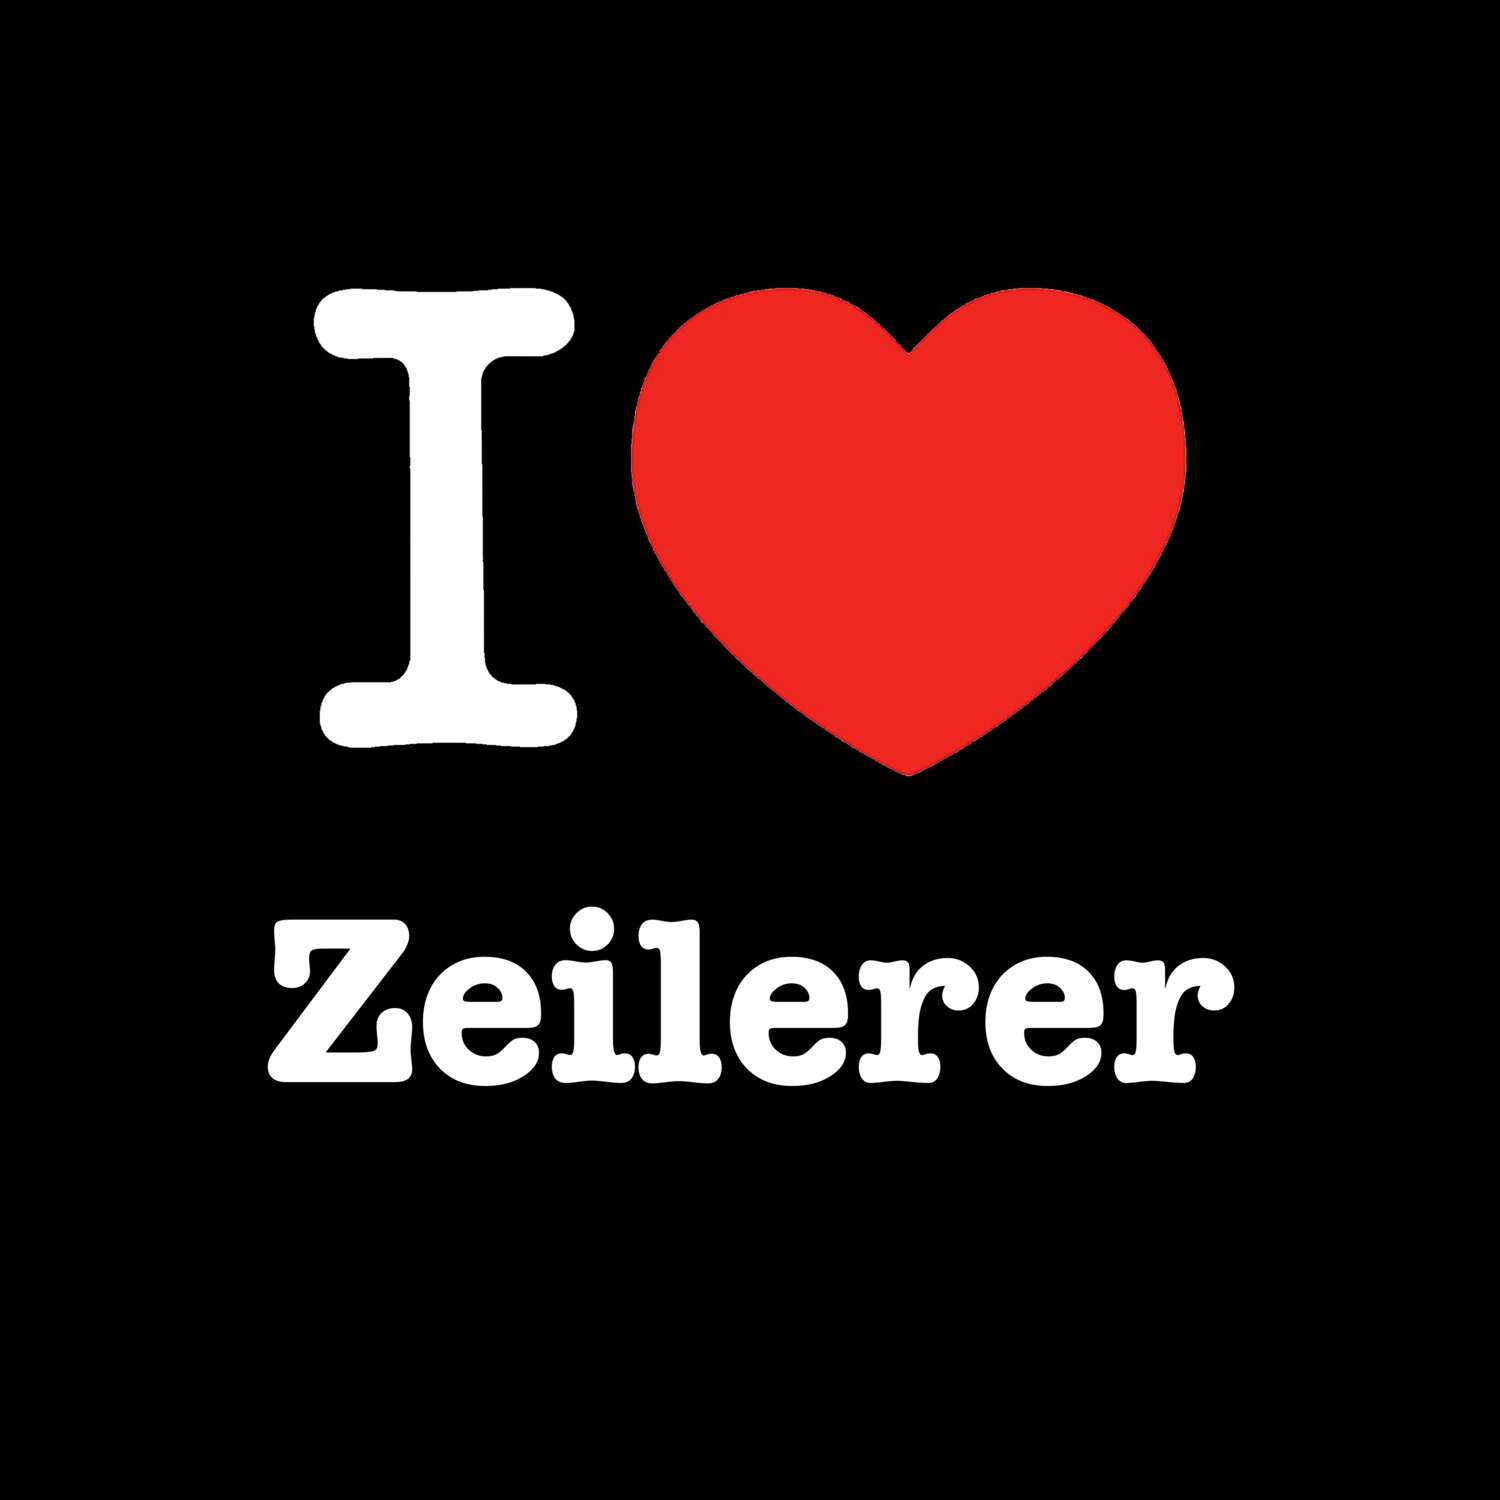 Zeilerer T-Shirt »I love«